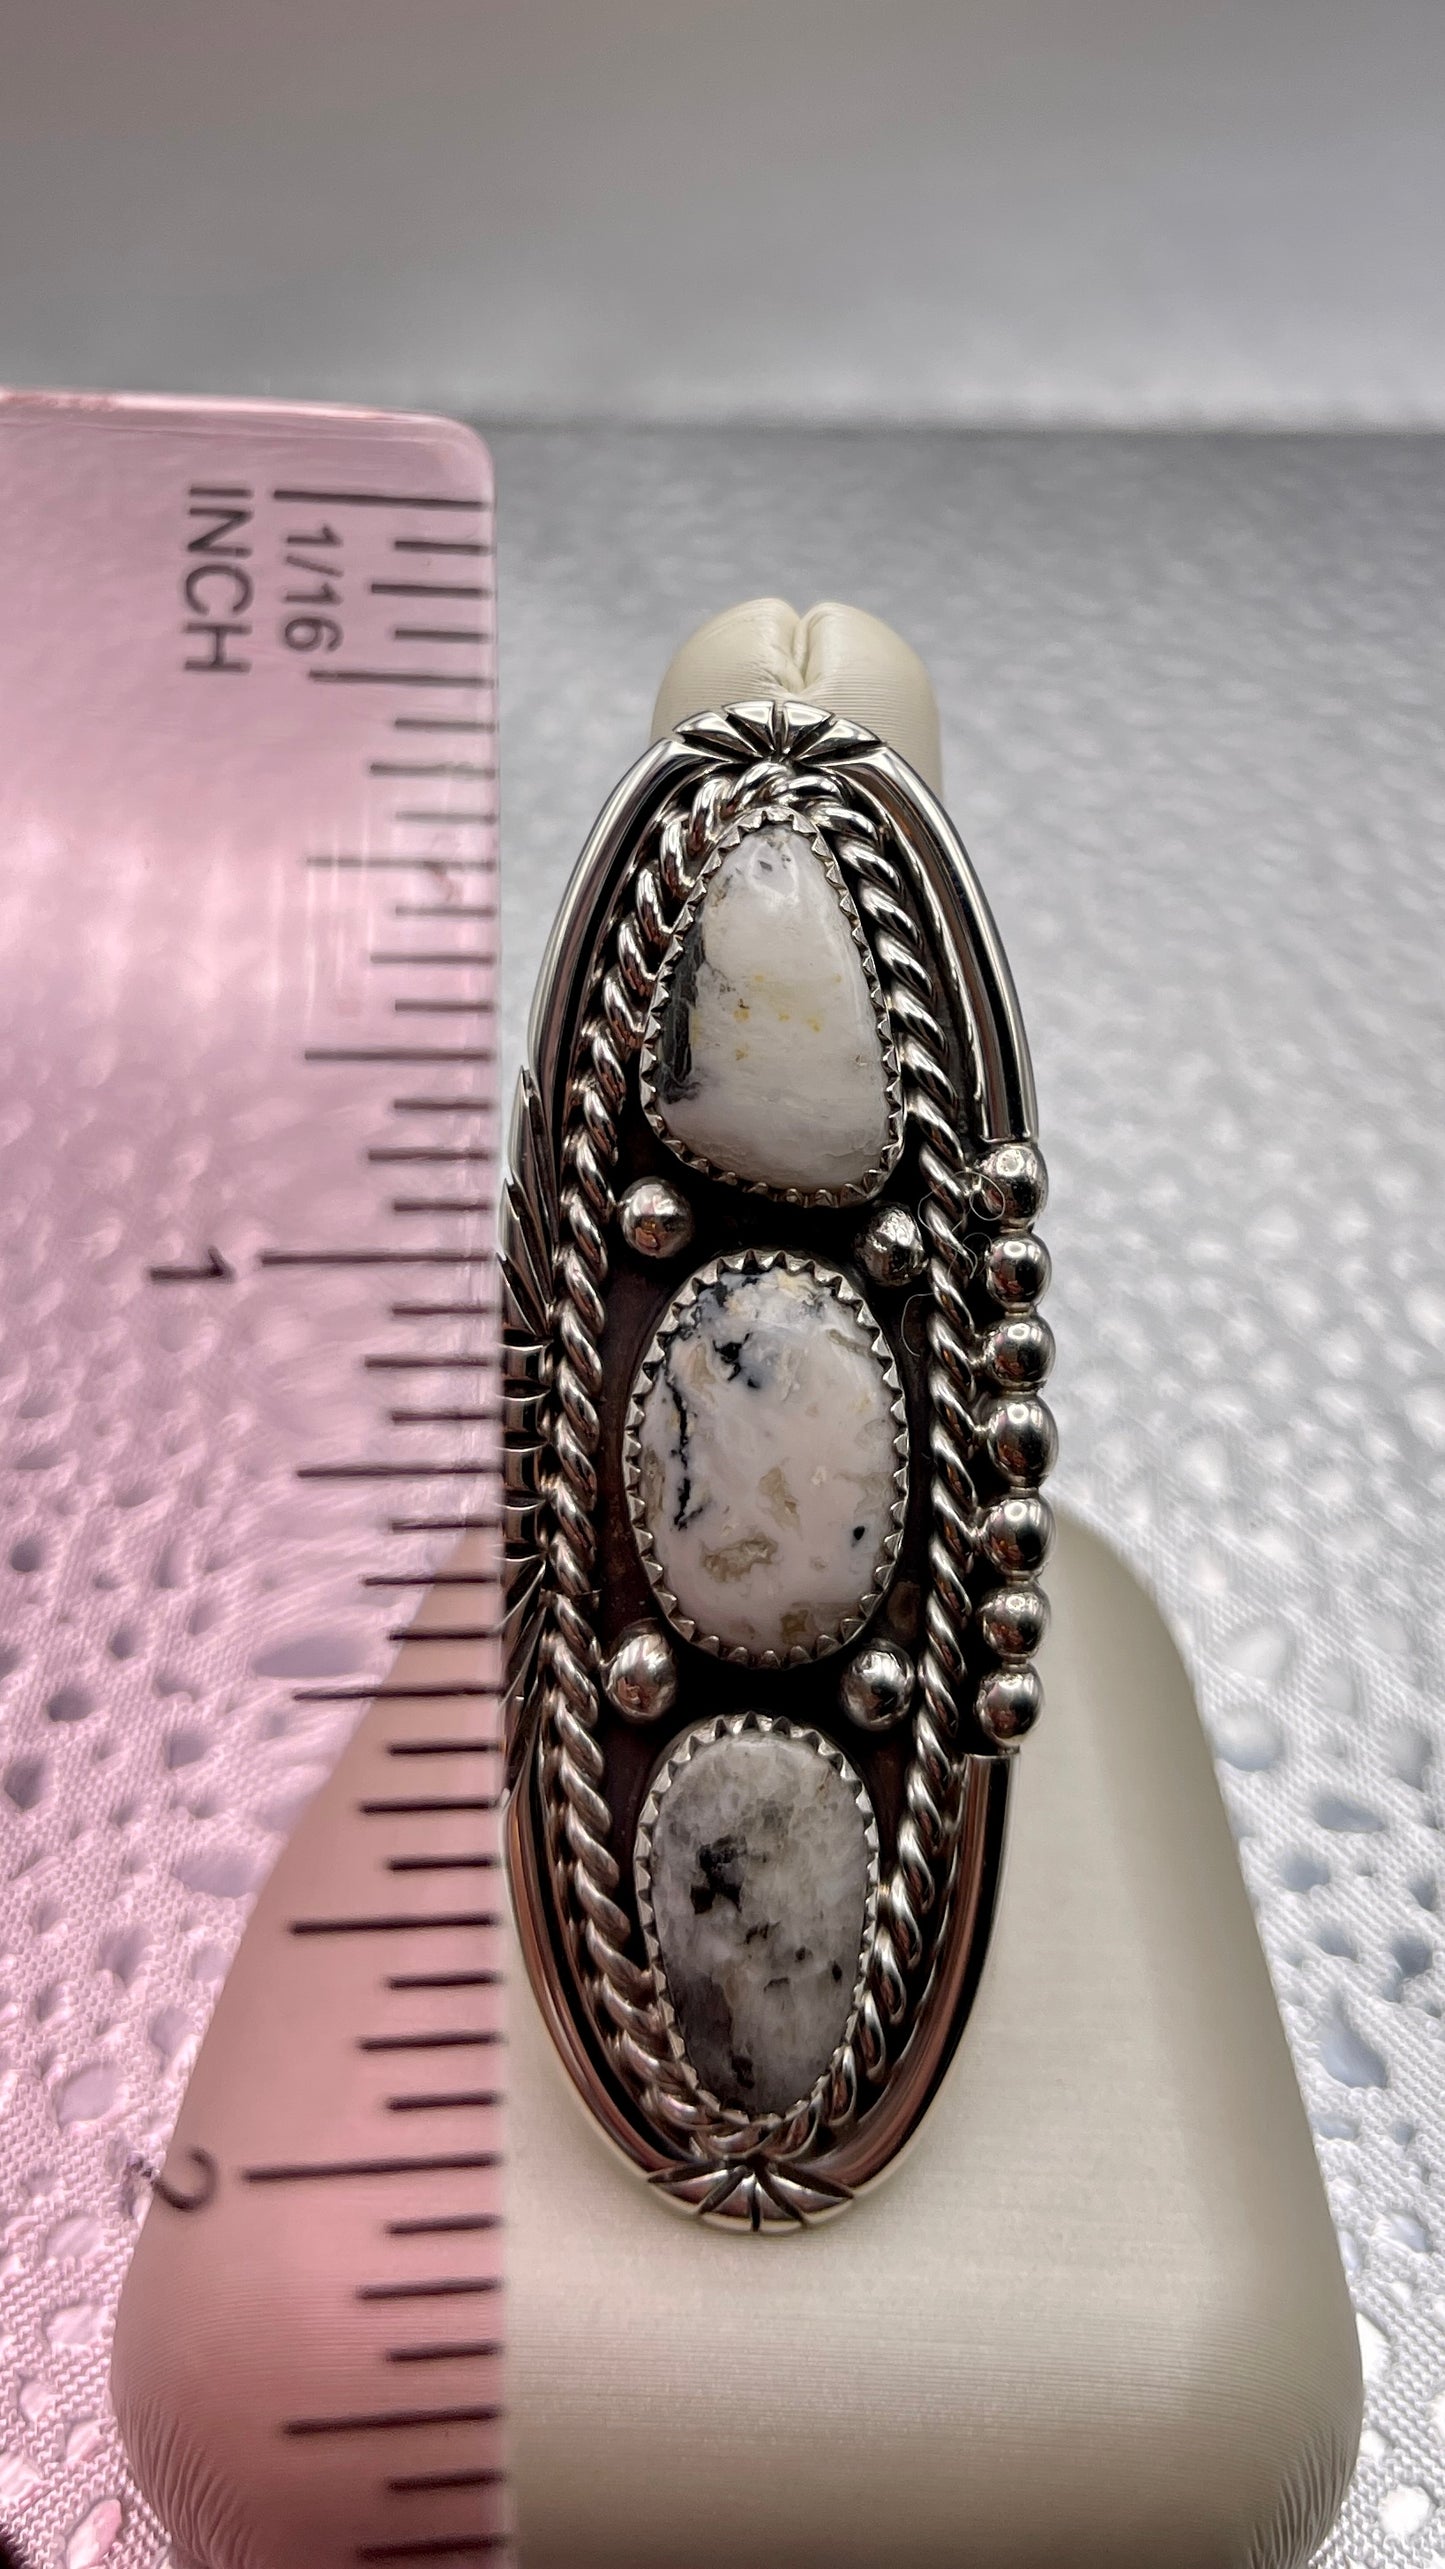 Desert Treasure: White Buffalo, black and white stone set in Sterling Silver Ring